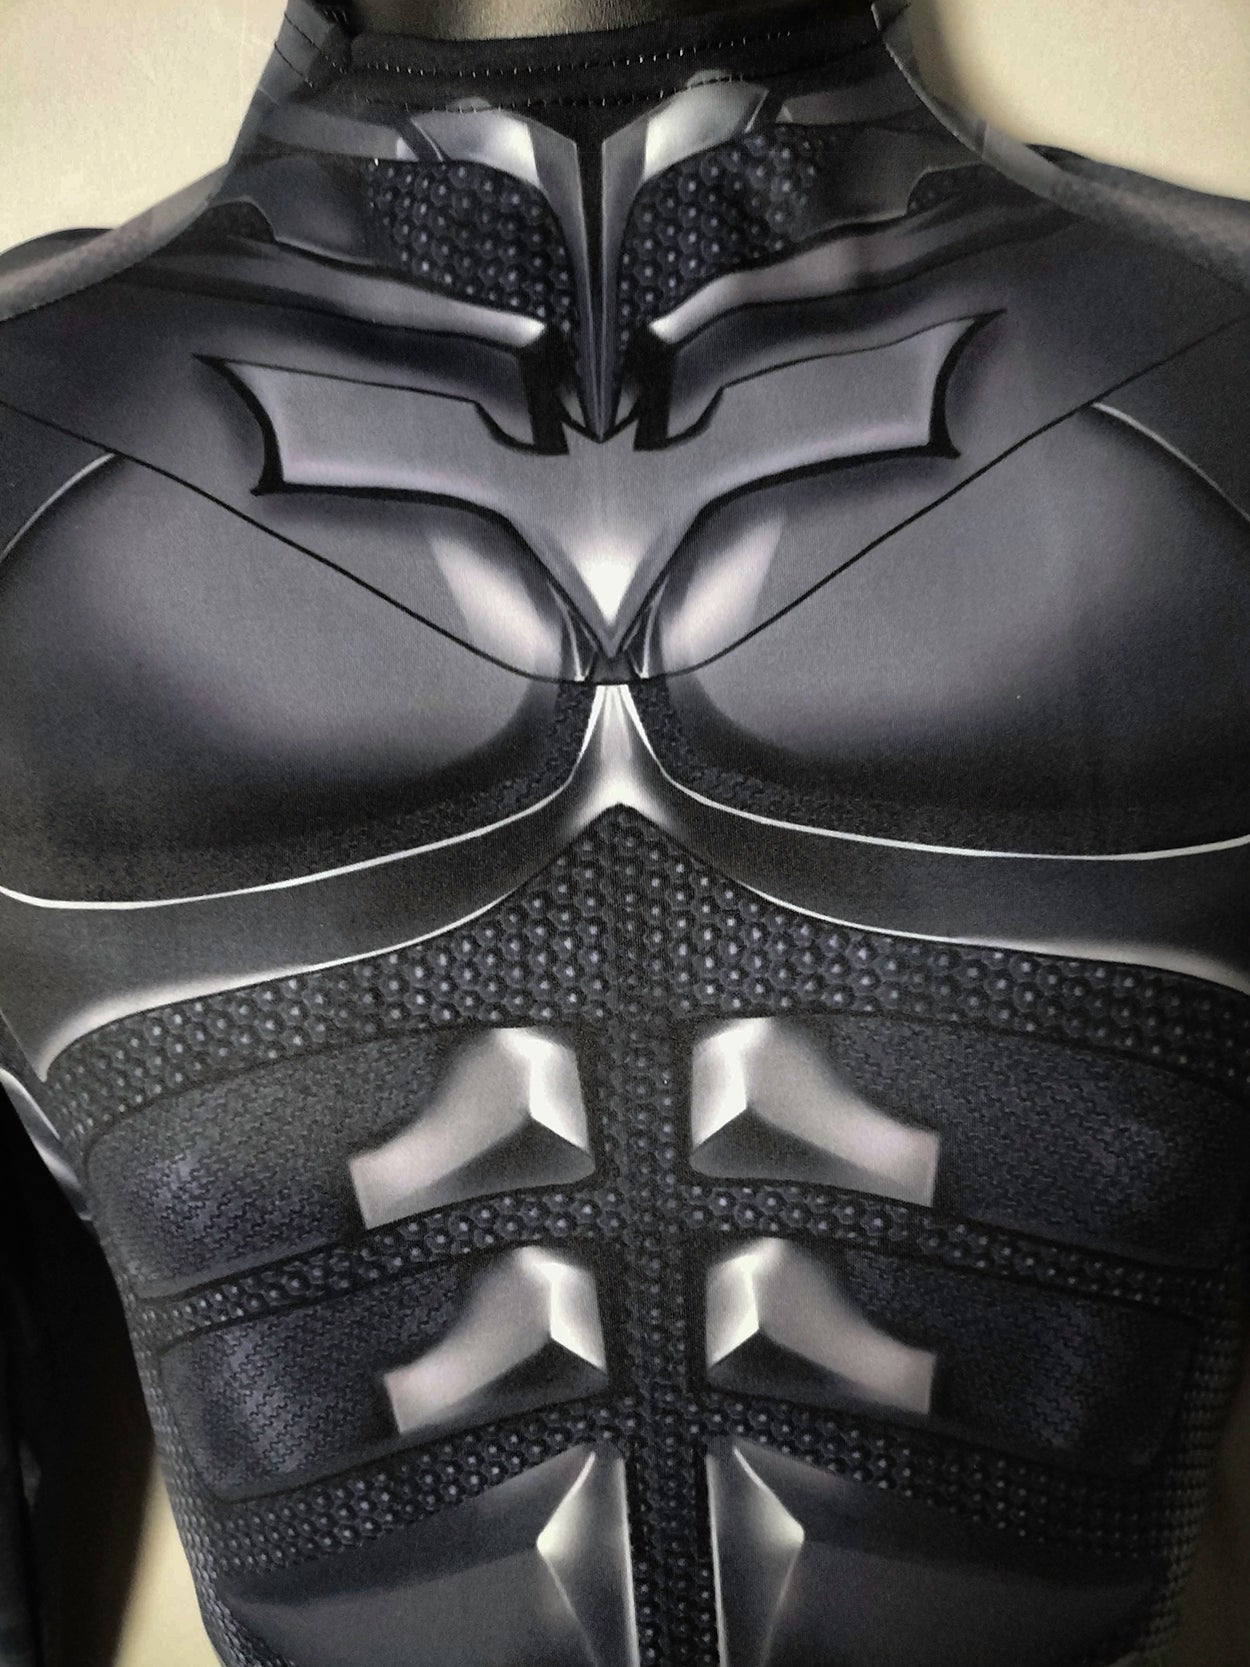 BATMAN THE DARK KNIGHT bodysuit